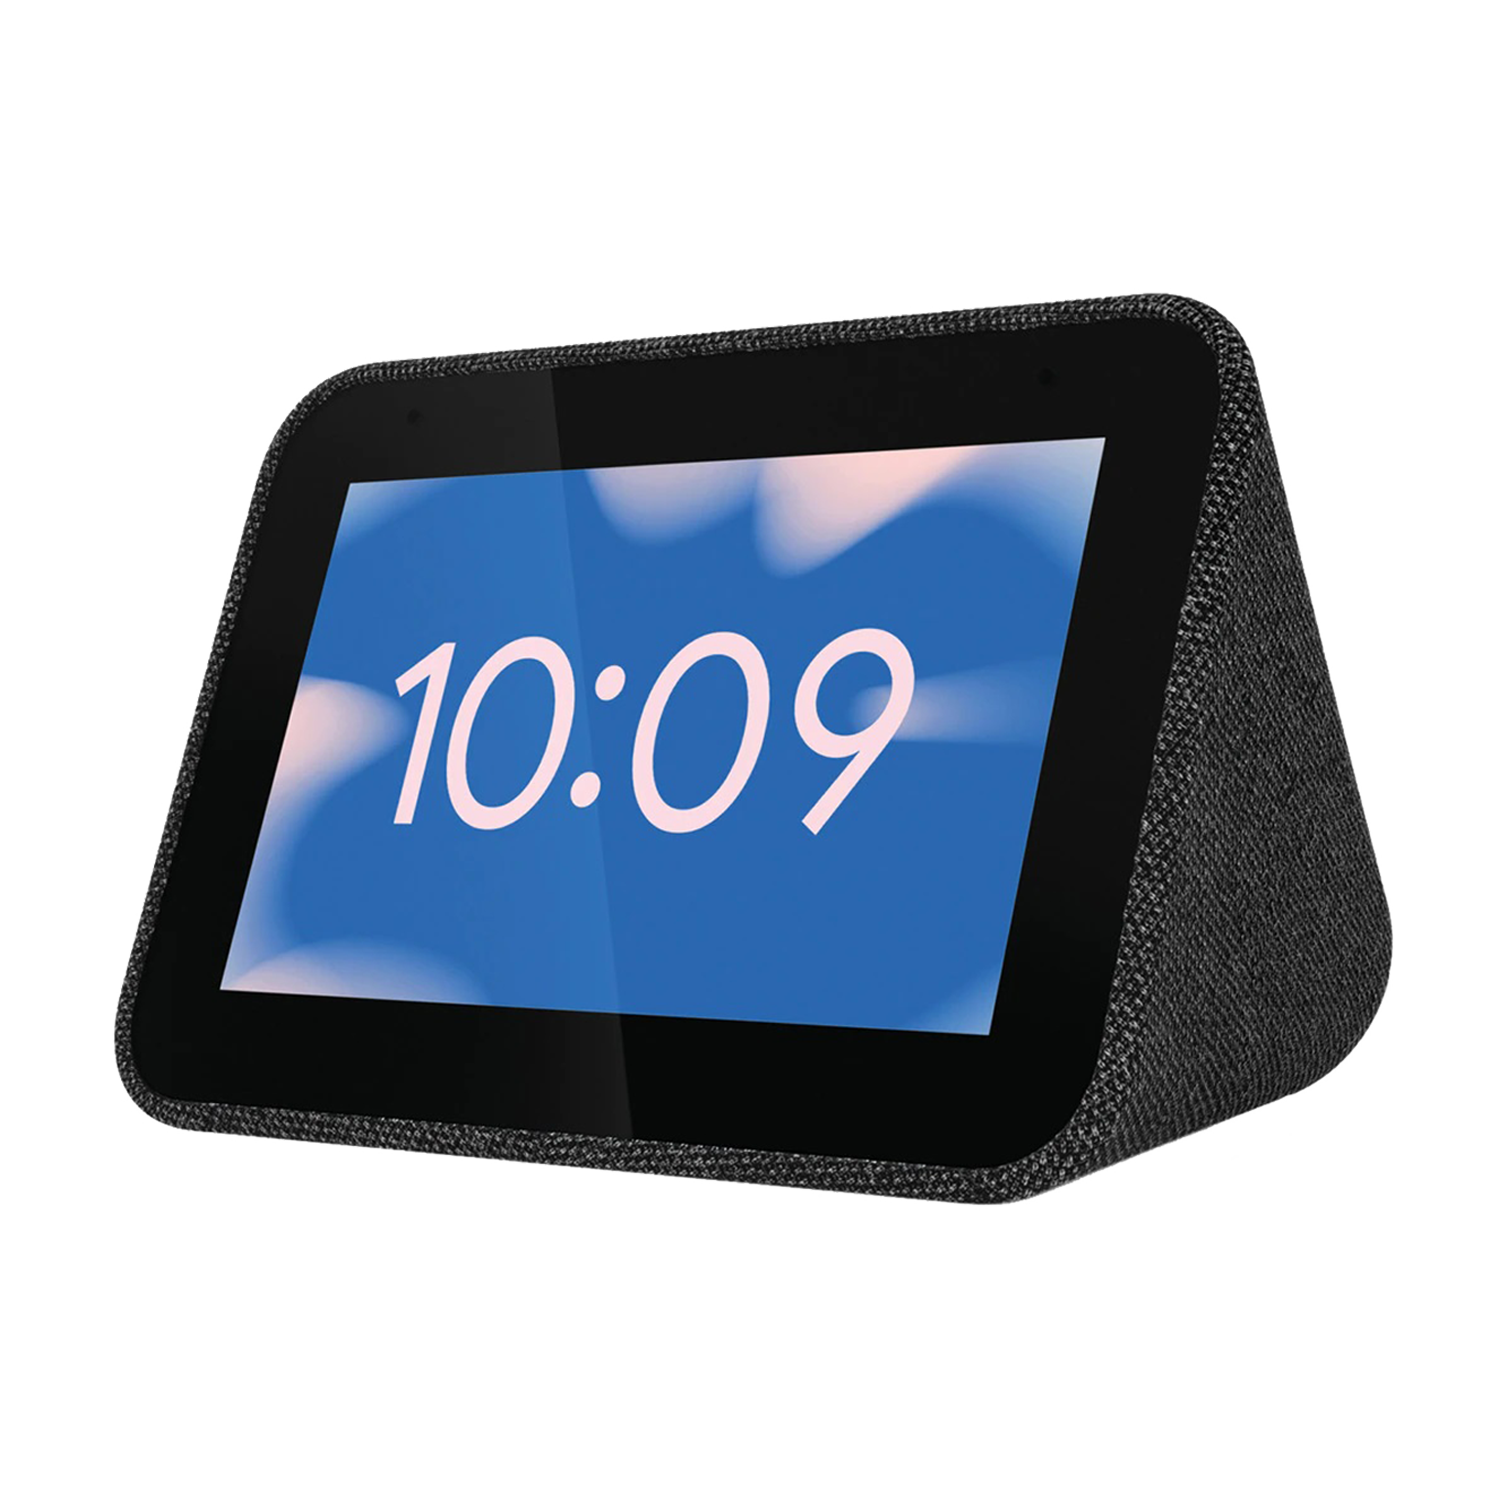 Pantalla Inteligente Lenovo smart clock negro con asistente google reloj despertador assistant wifi bluetooth sonido 6